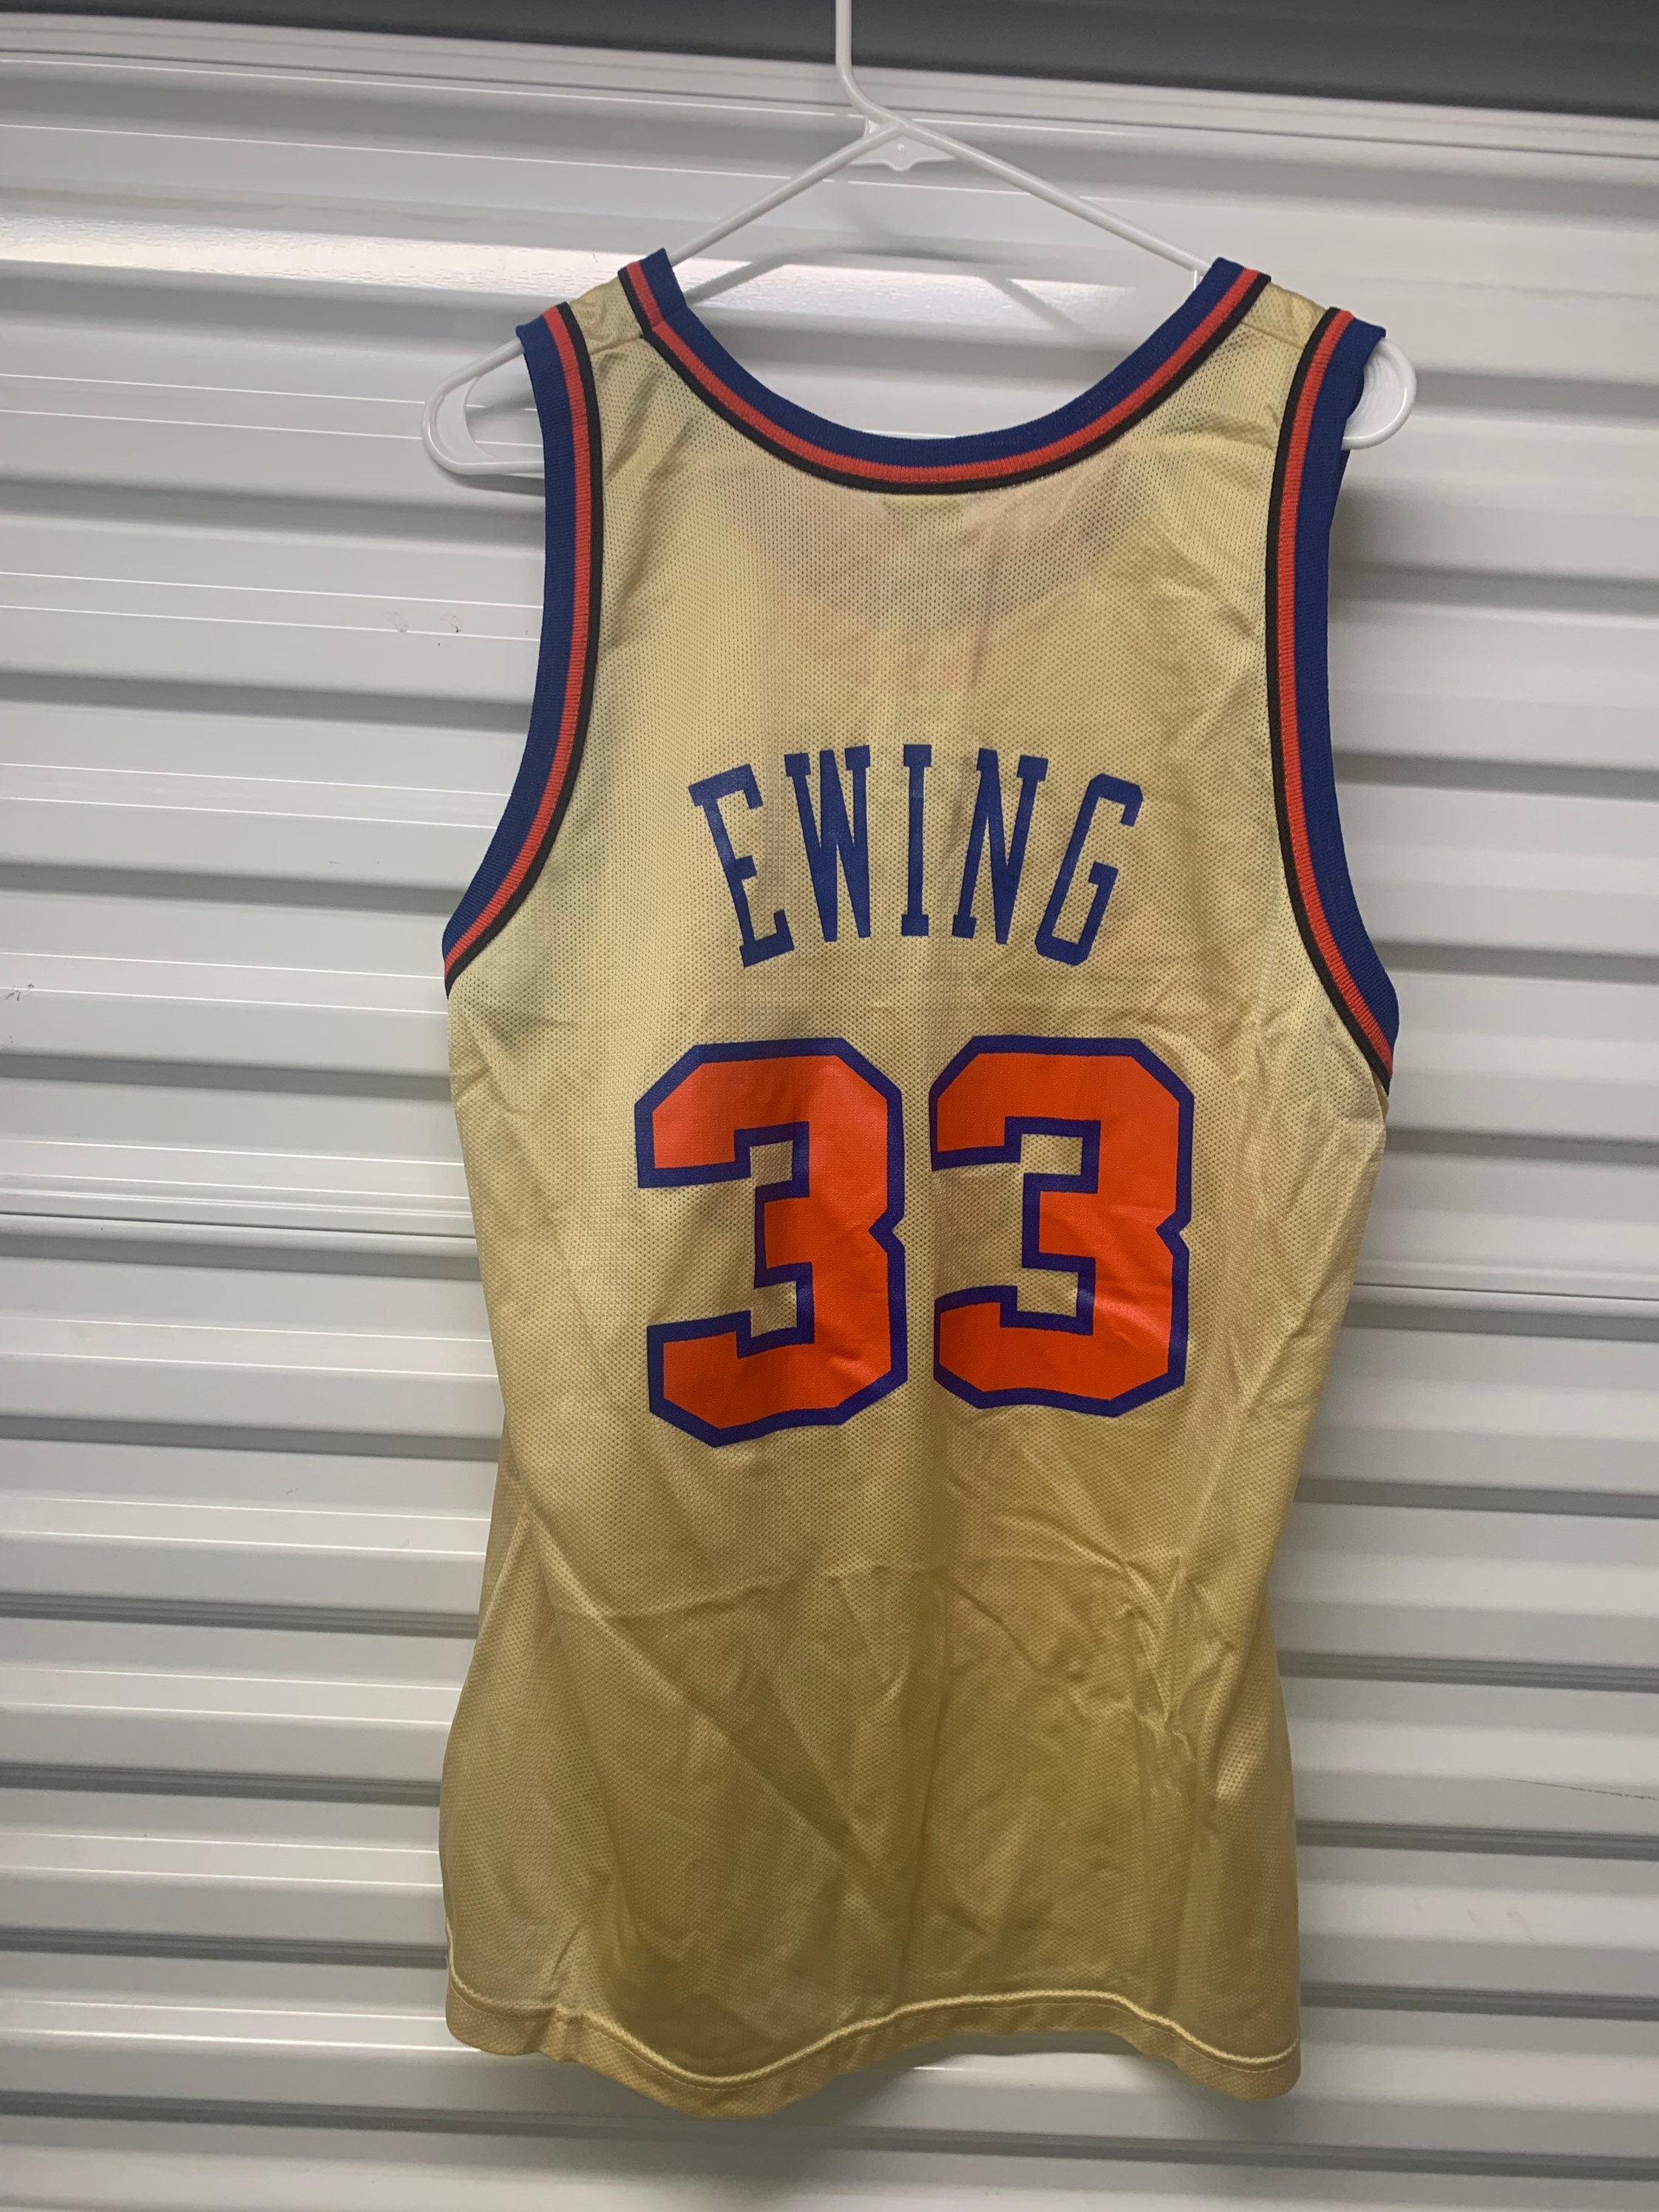 XL] Supreme Vintage New York 'Knicks' Ewing Basketball Jersey